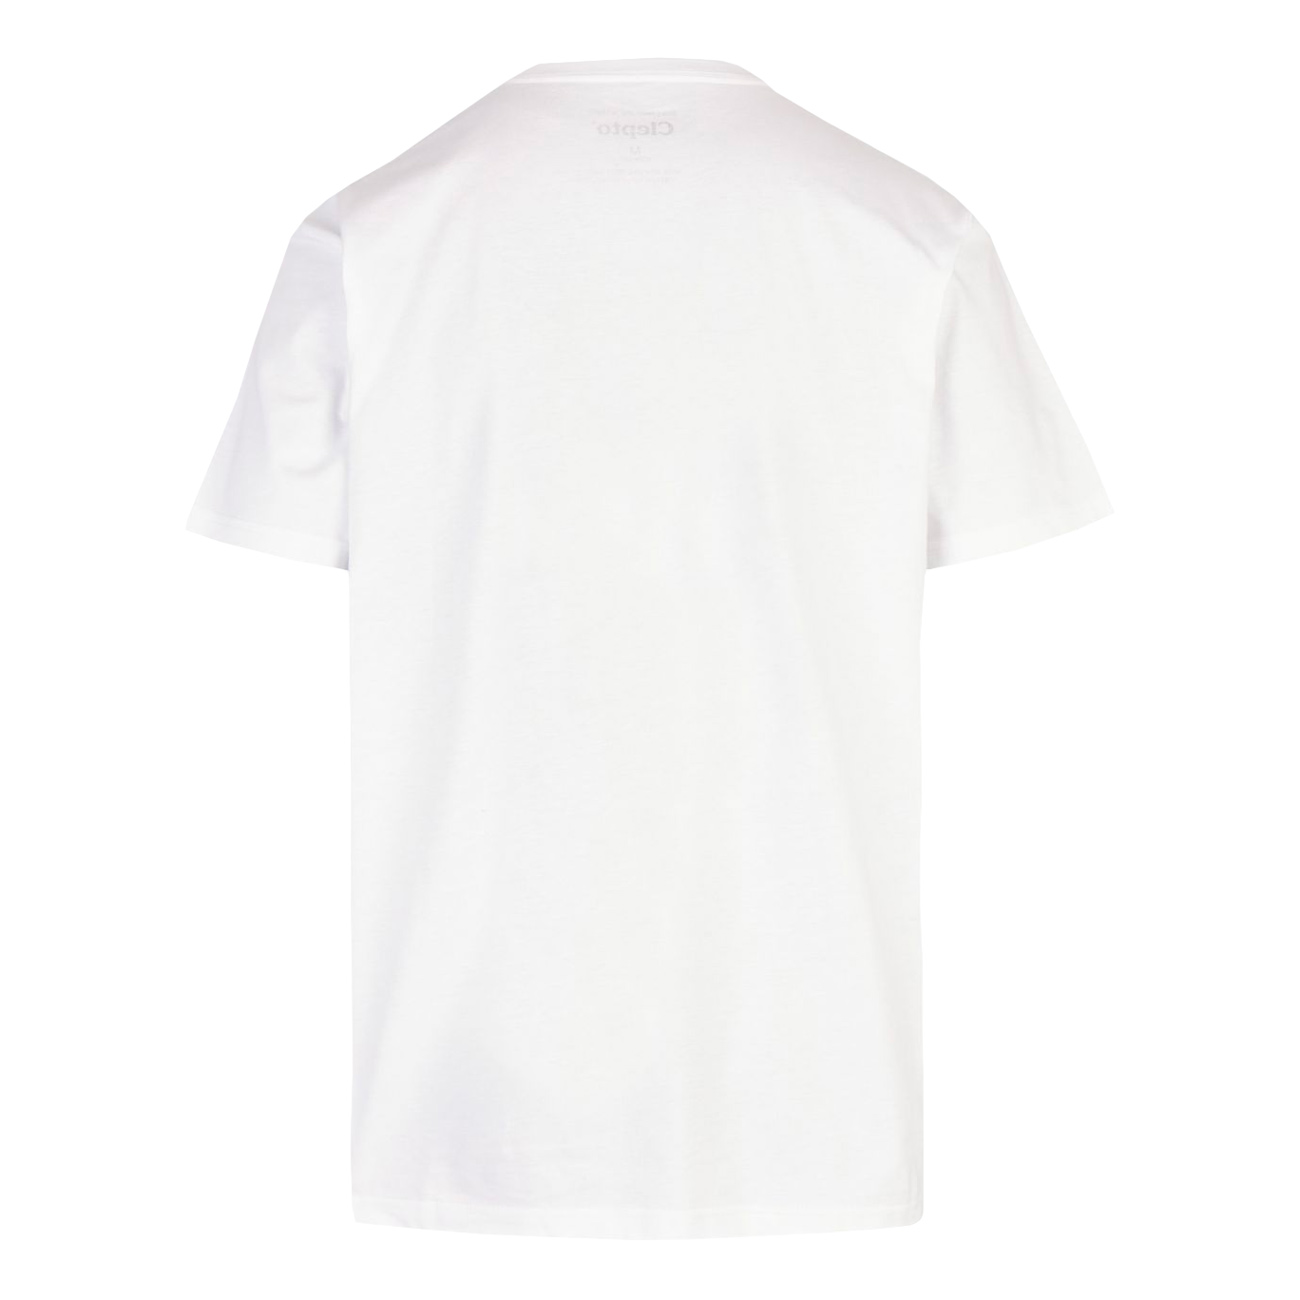 Cleptomanicx T-Shirt Cubes (white)